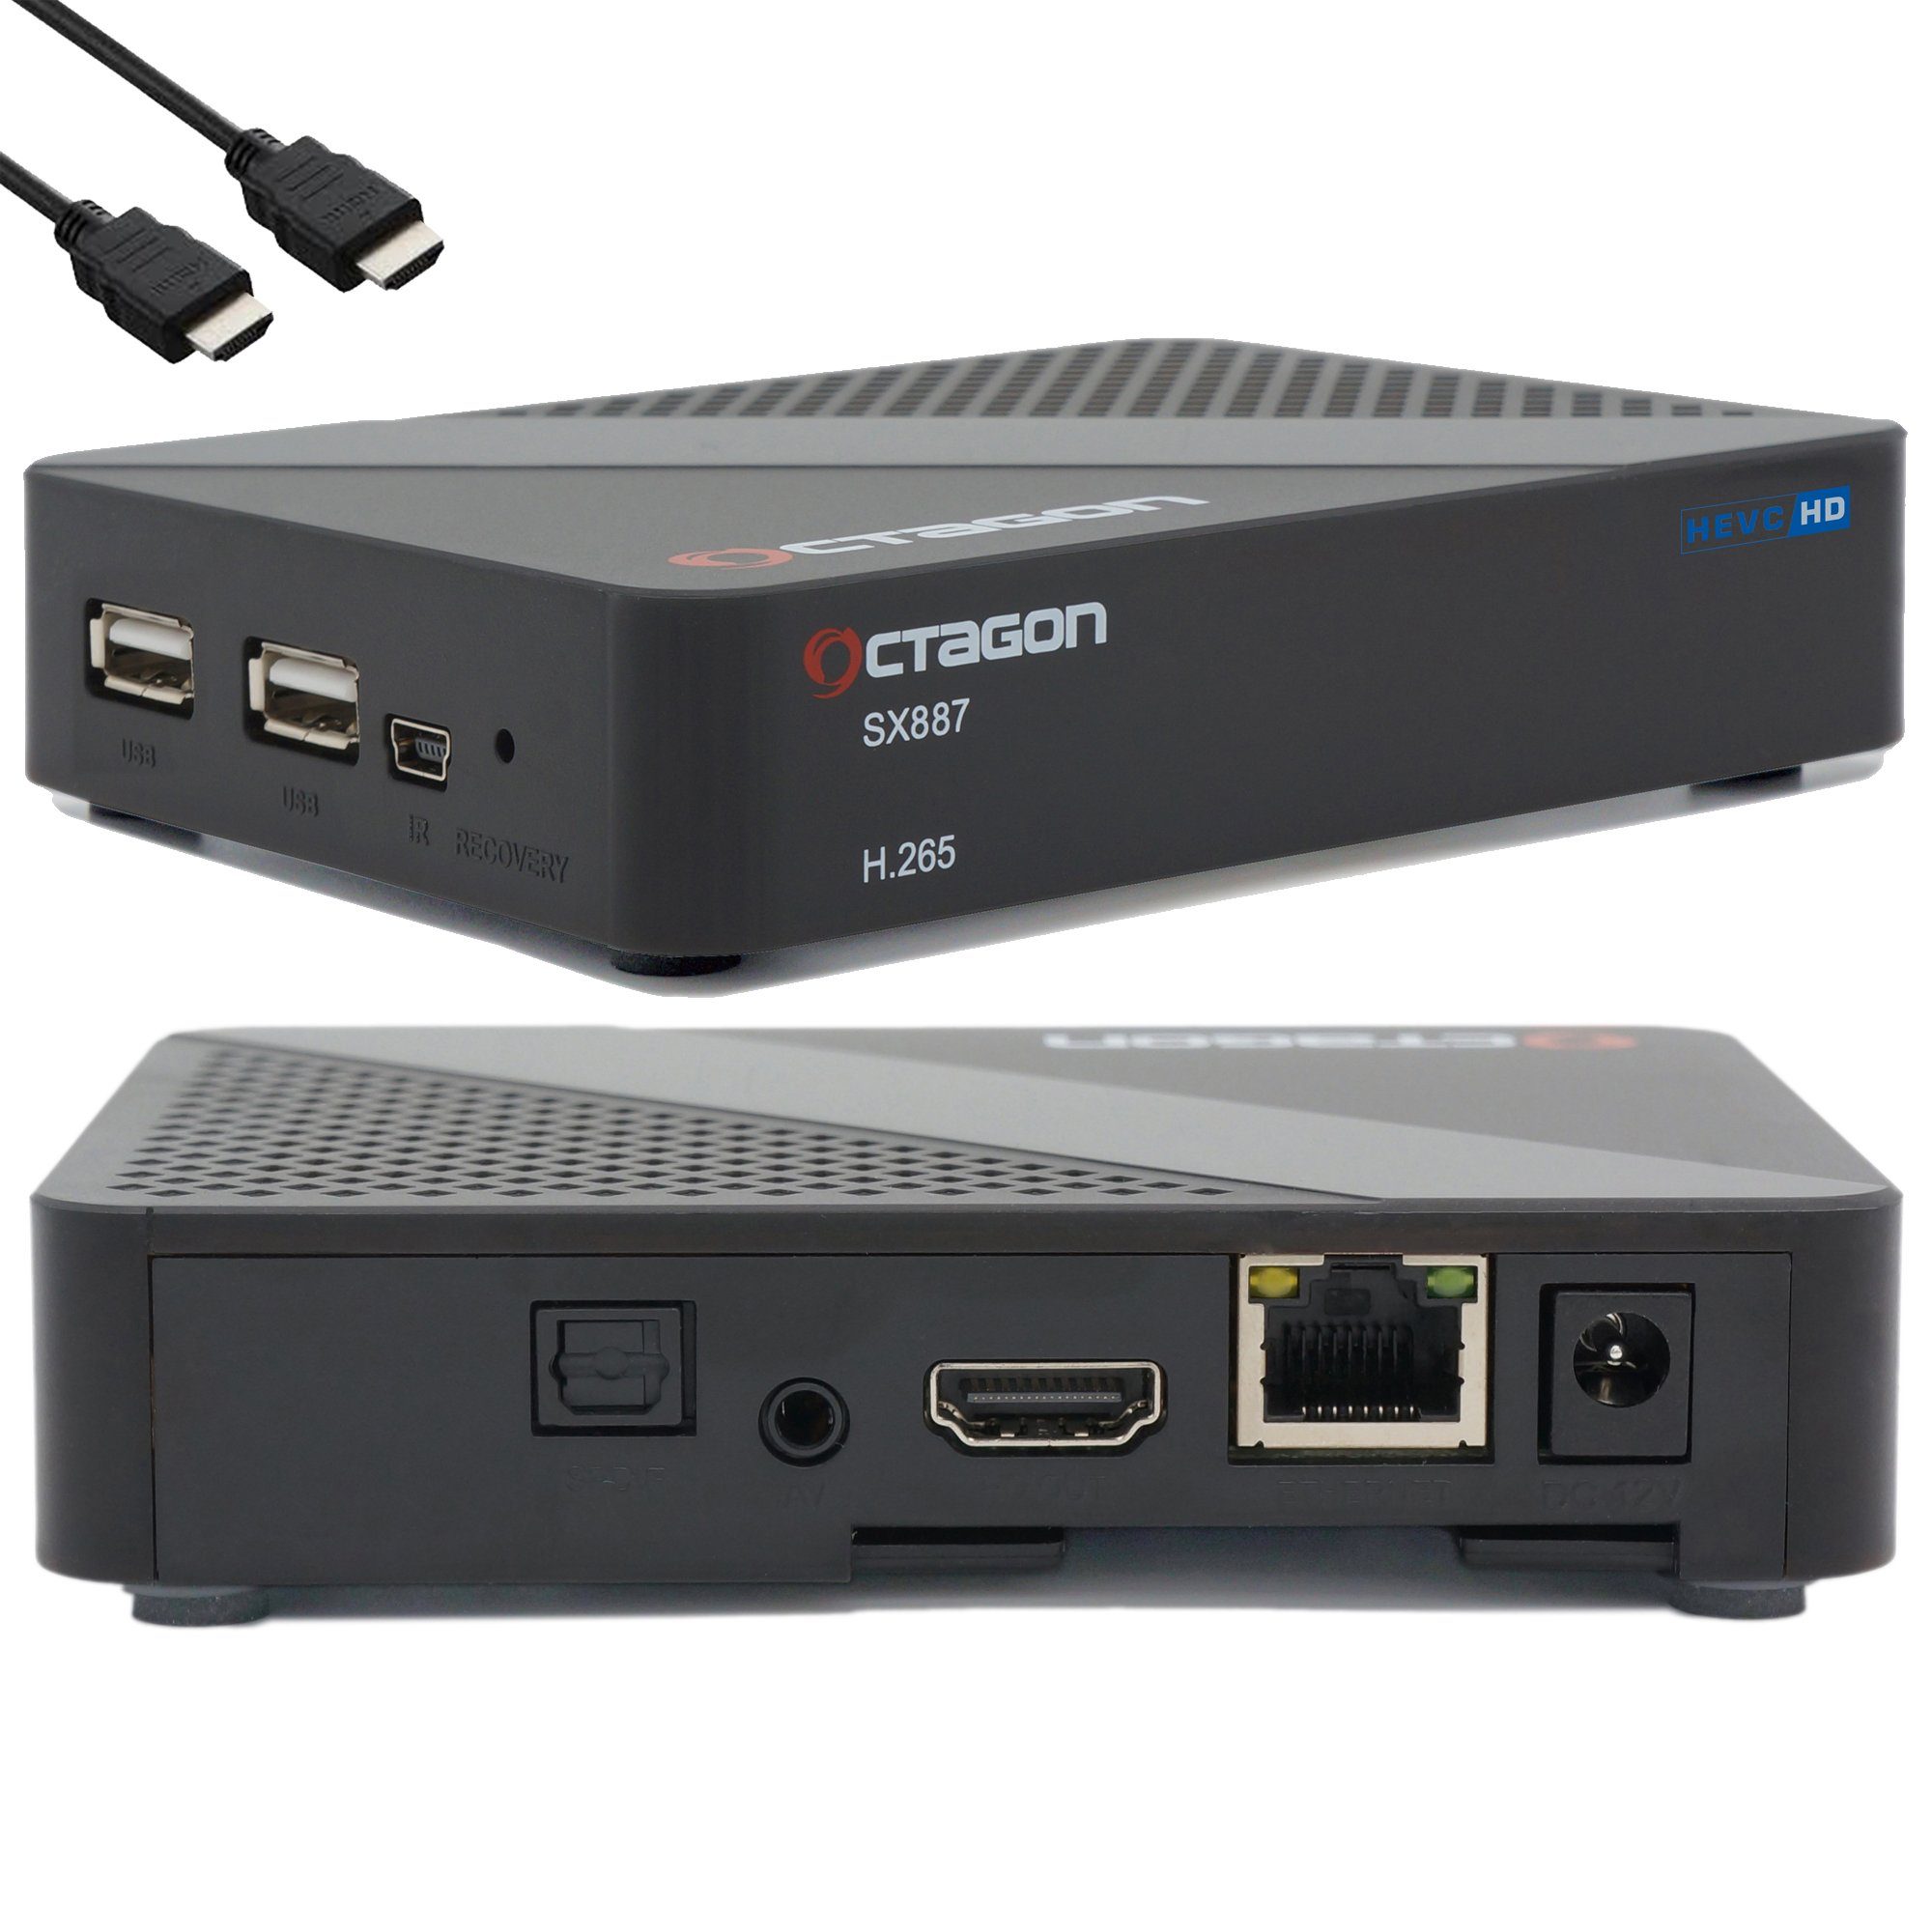 OCTAGON Streaming-Box H.265 HD IPTV IP SX887 Box HEVC Smart